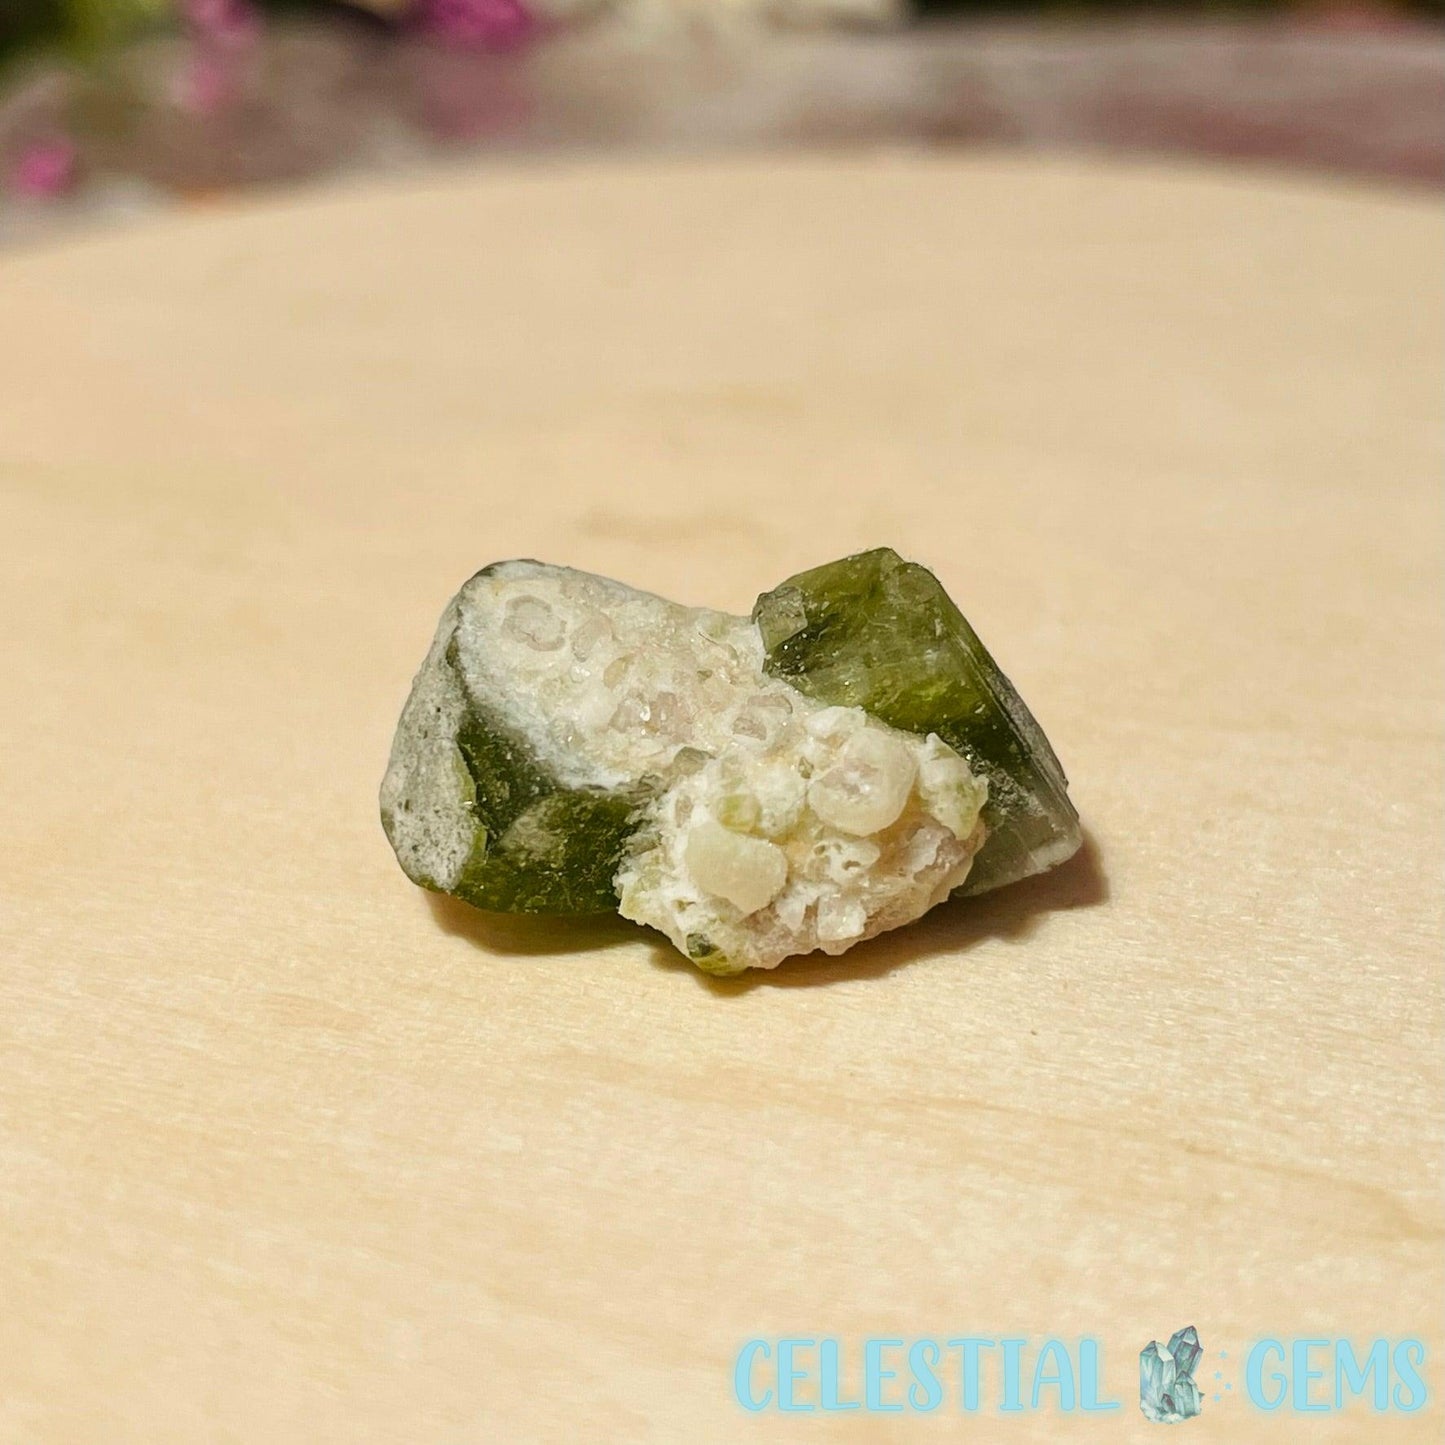 Green Tourmaline in Quartz Thumbnail Specimen (10 Available)